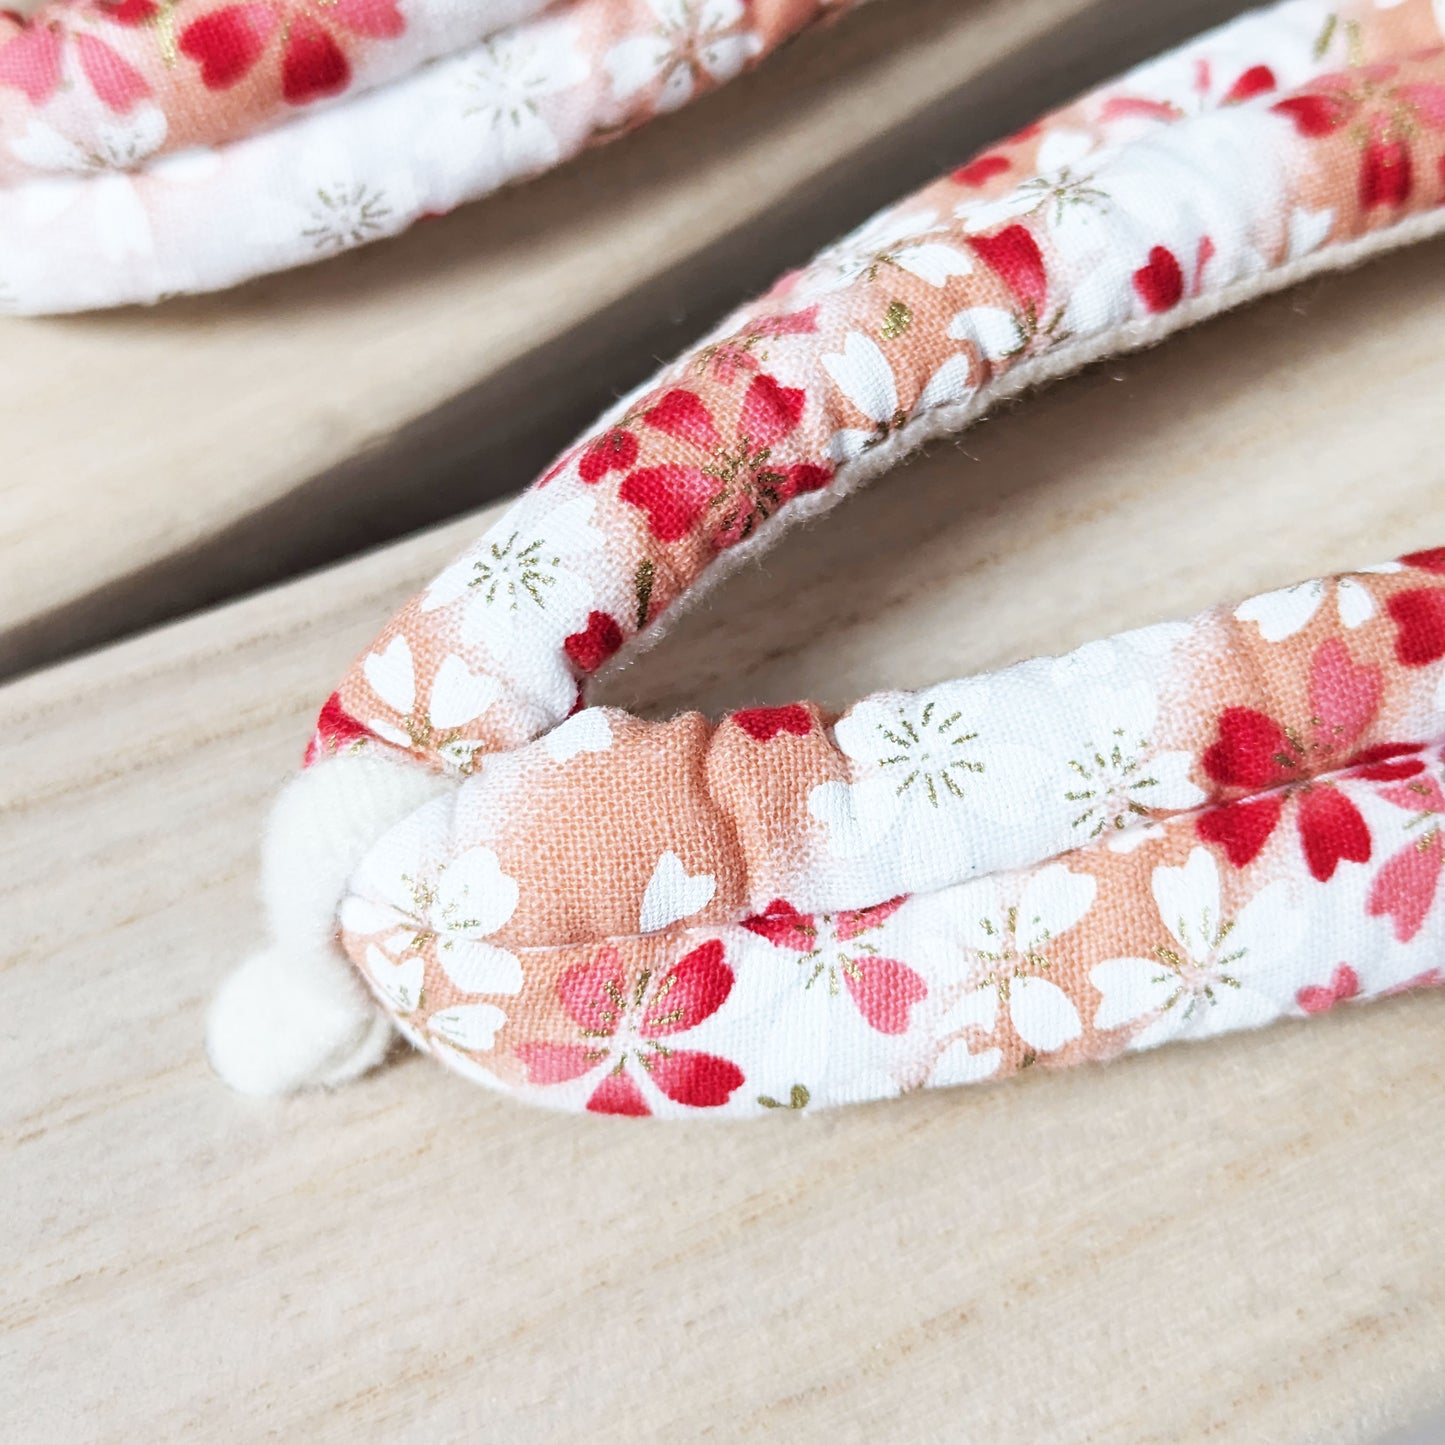 Japanese Women's Geta Sandals - Pink Cherry Blossoms